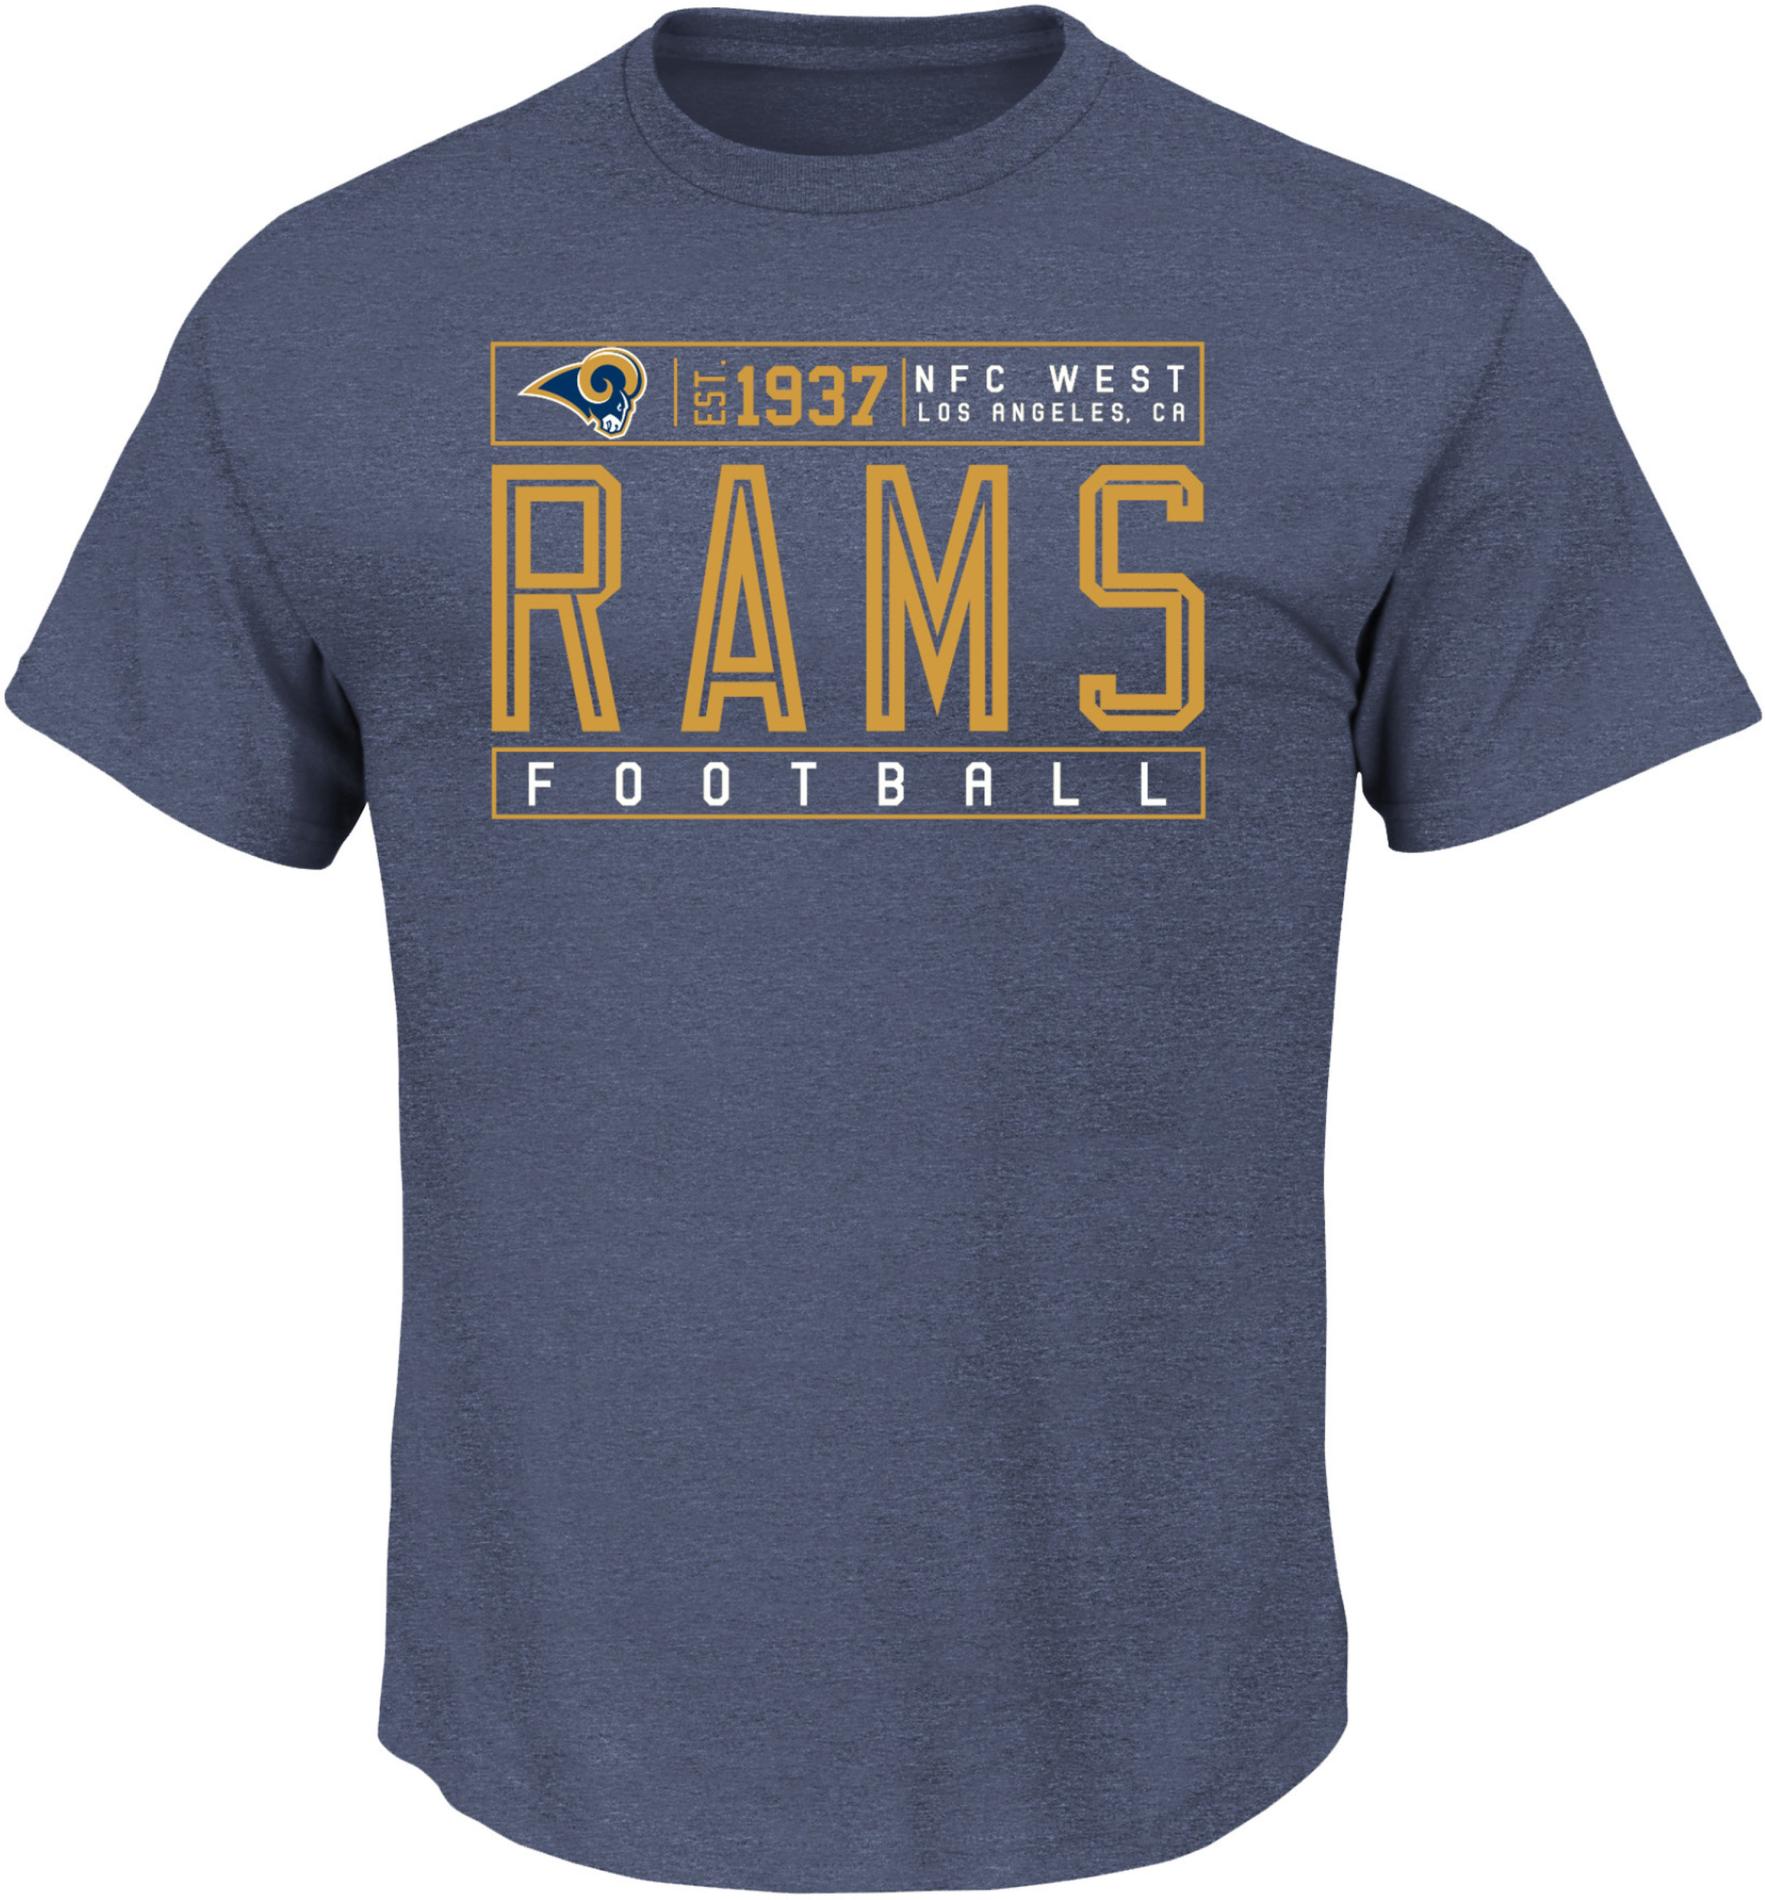 NFL Men's Short-Sleeve T-Shirt - Los Angeles Rams